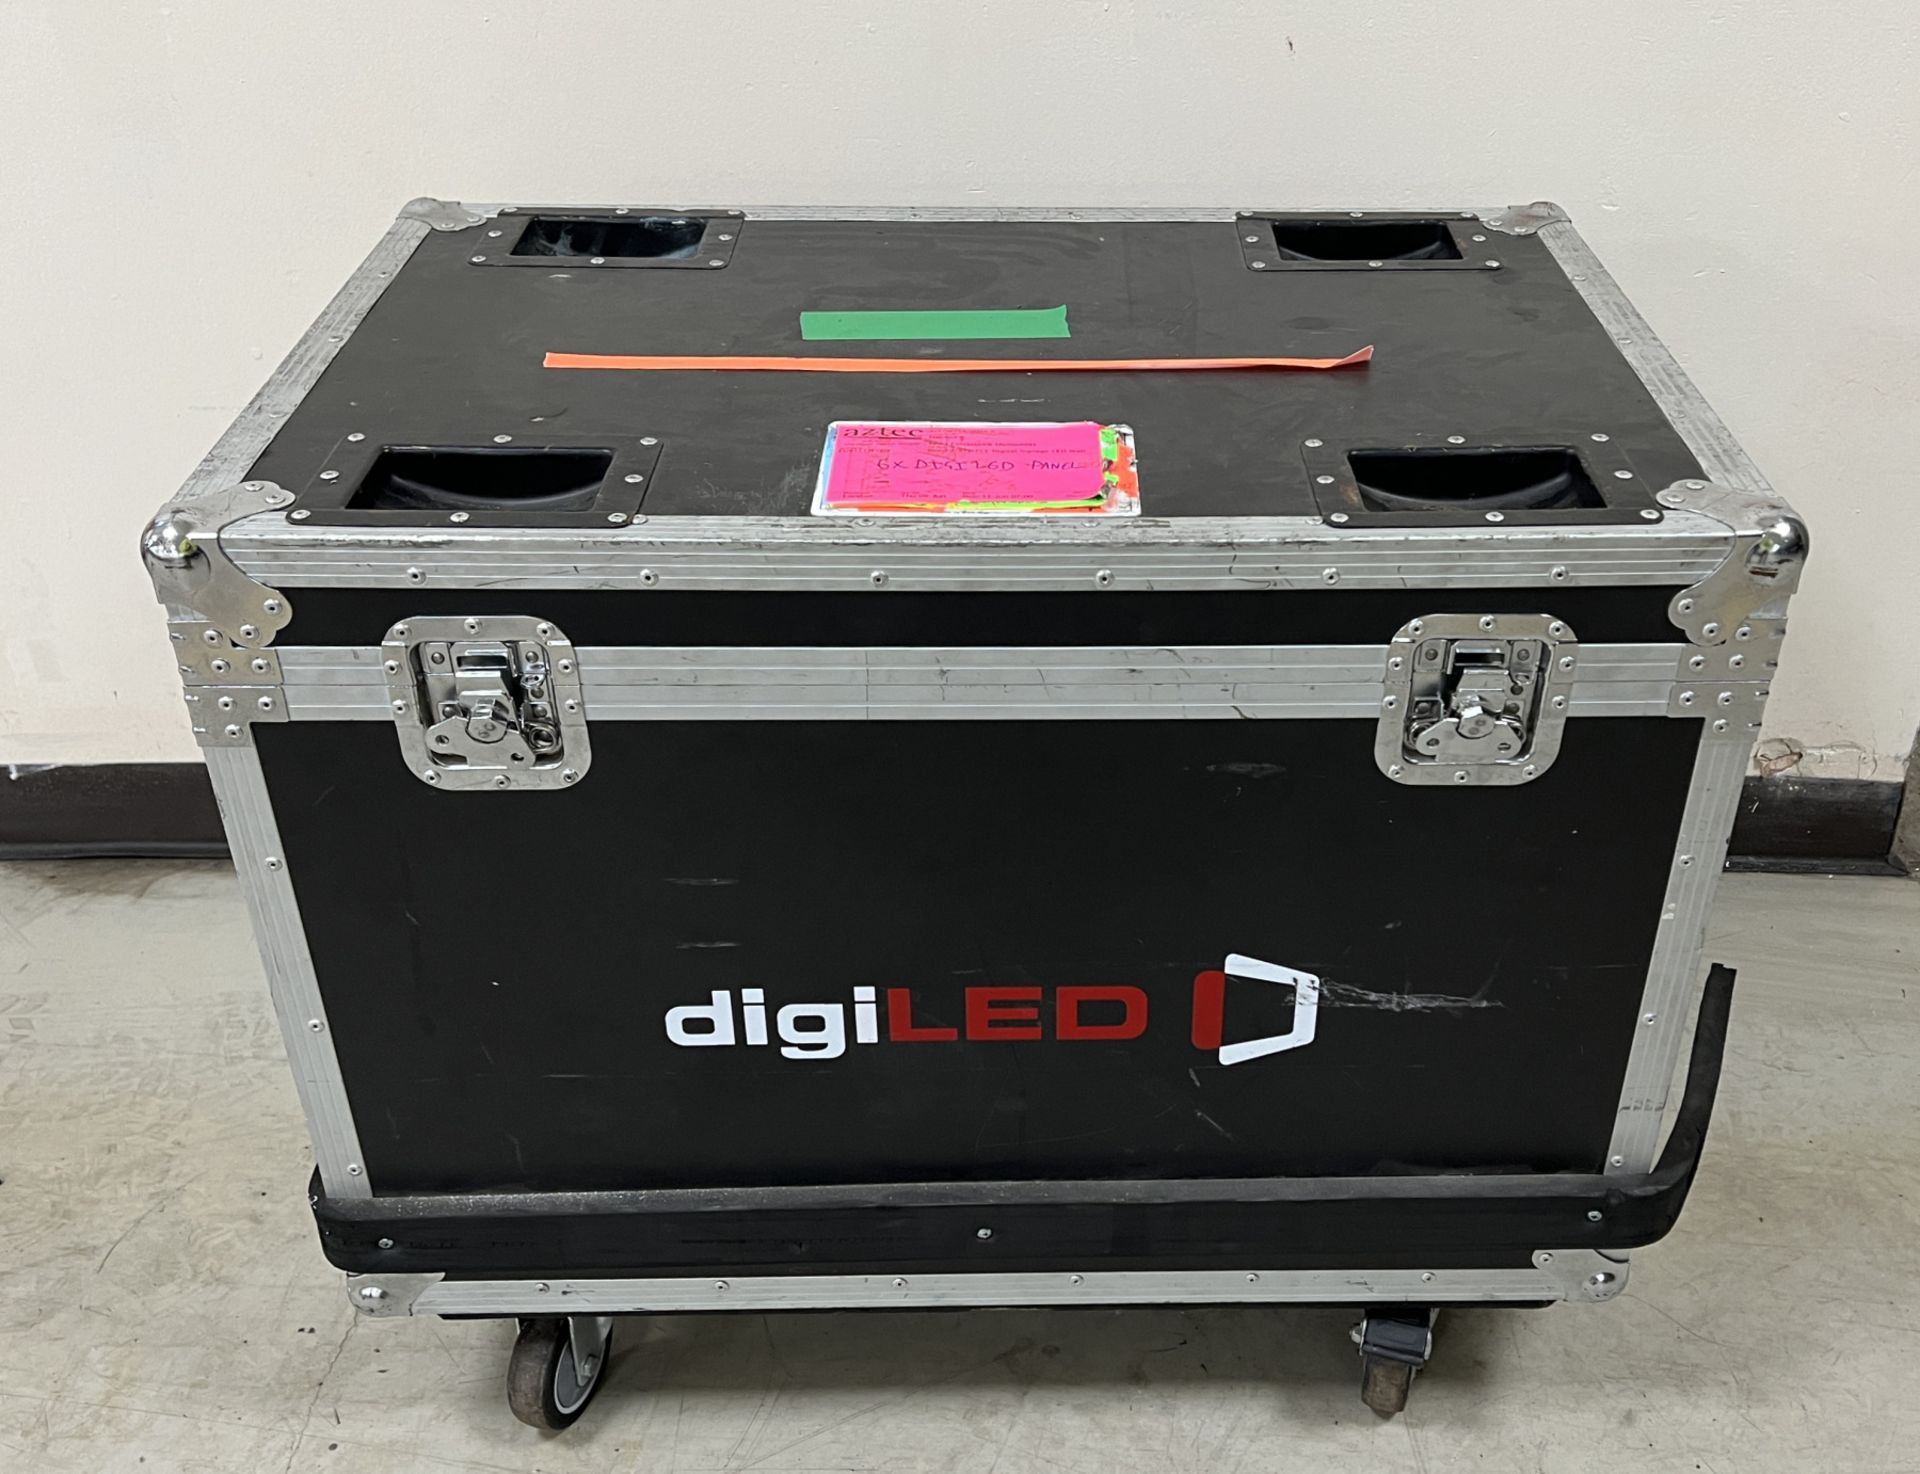 Digi LED HRI3900 kit - 120 LED tiles housed in 20 wheeled flight cases - see description for details - Image 139 of 196